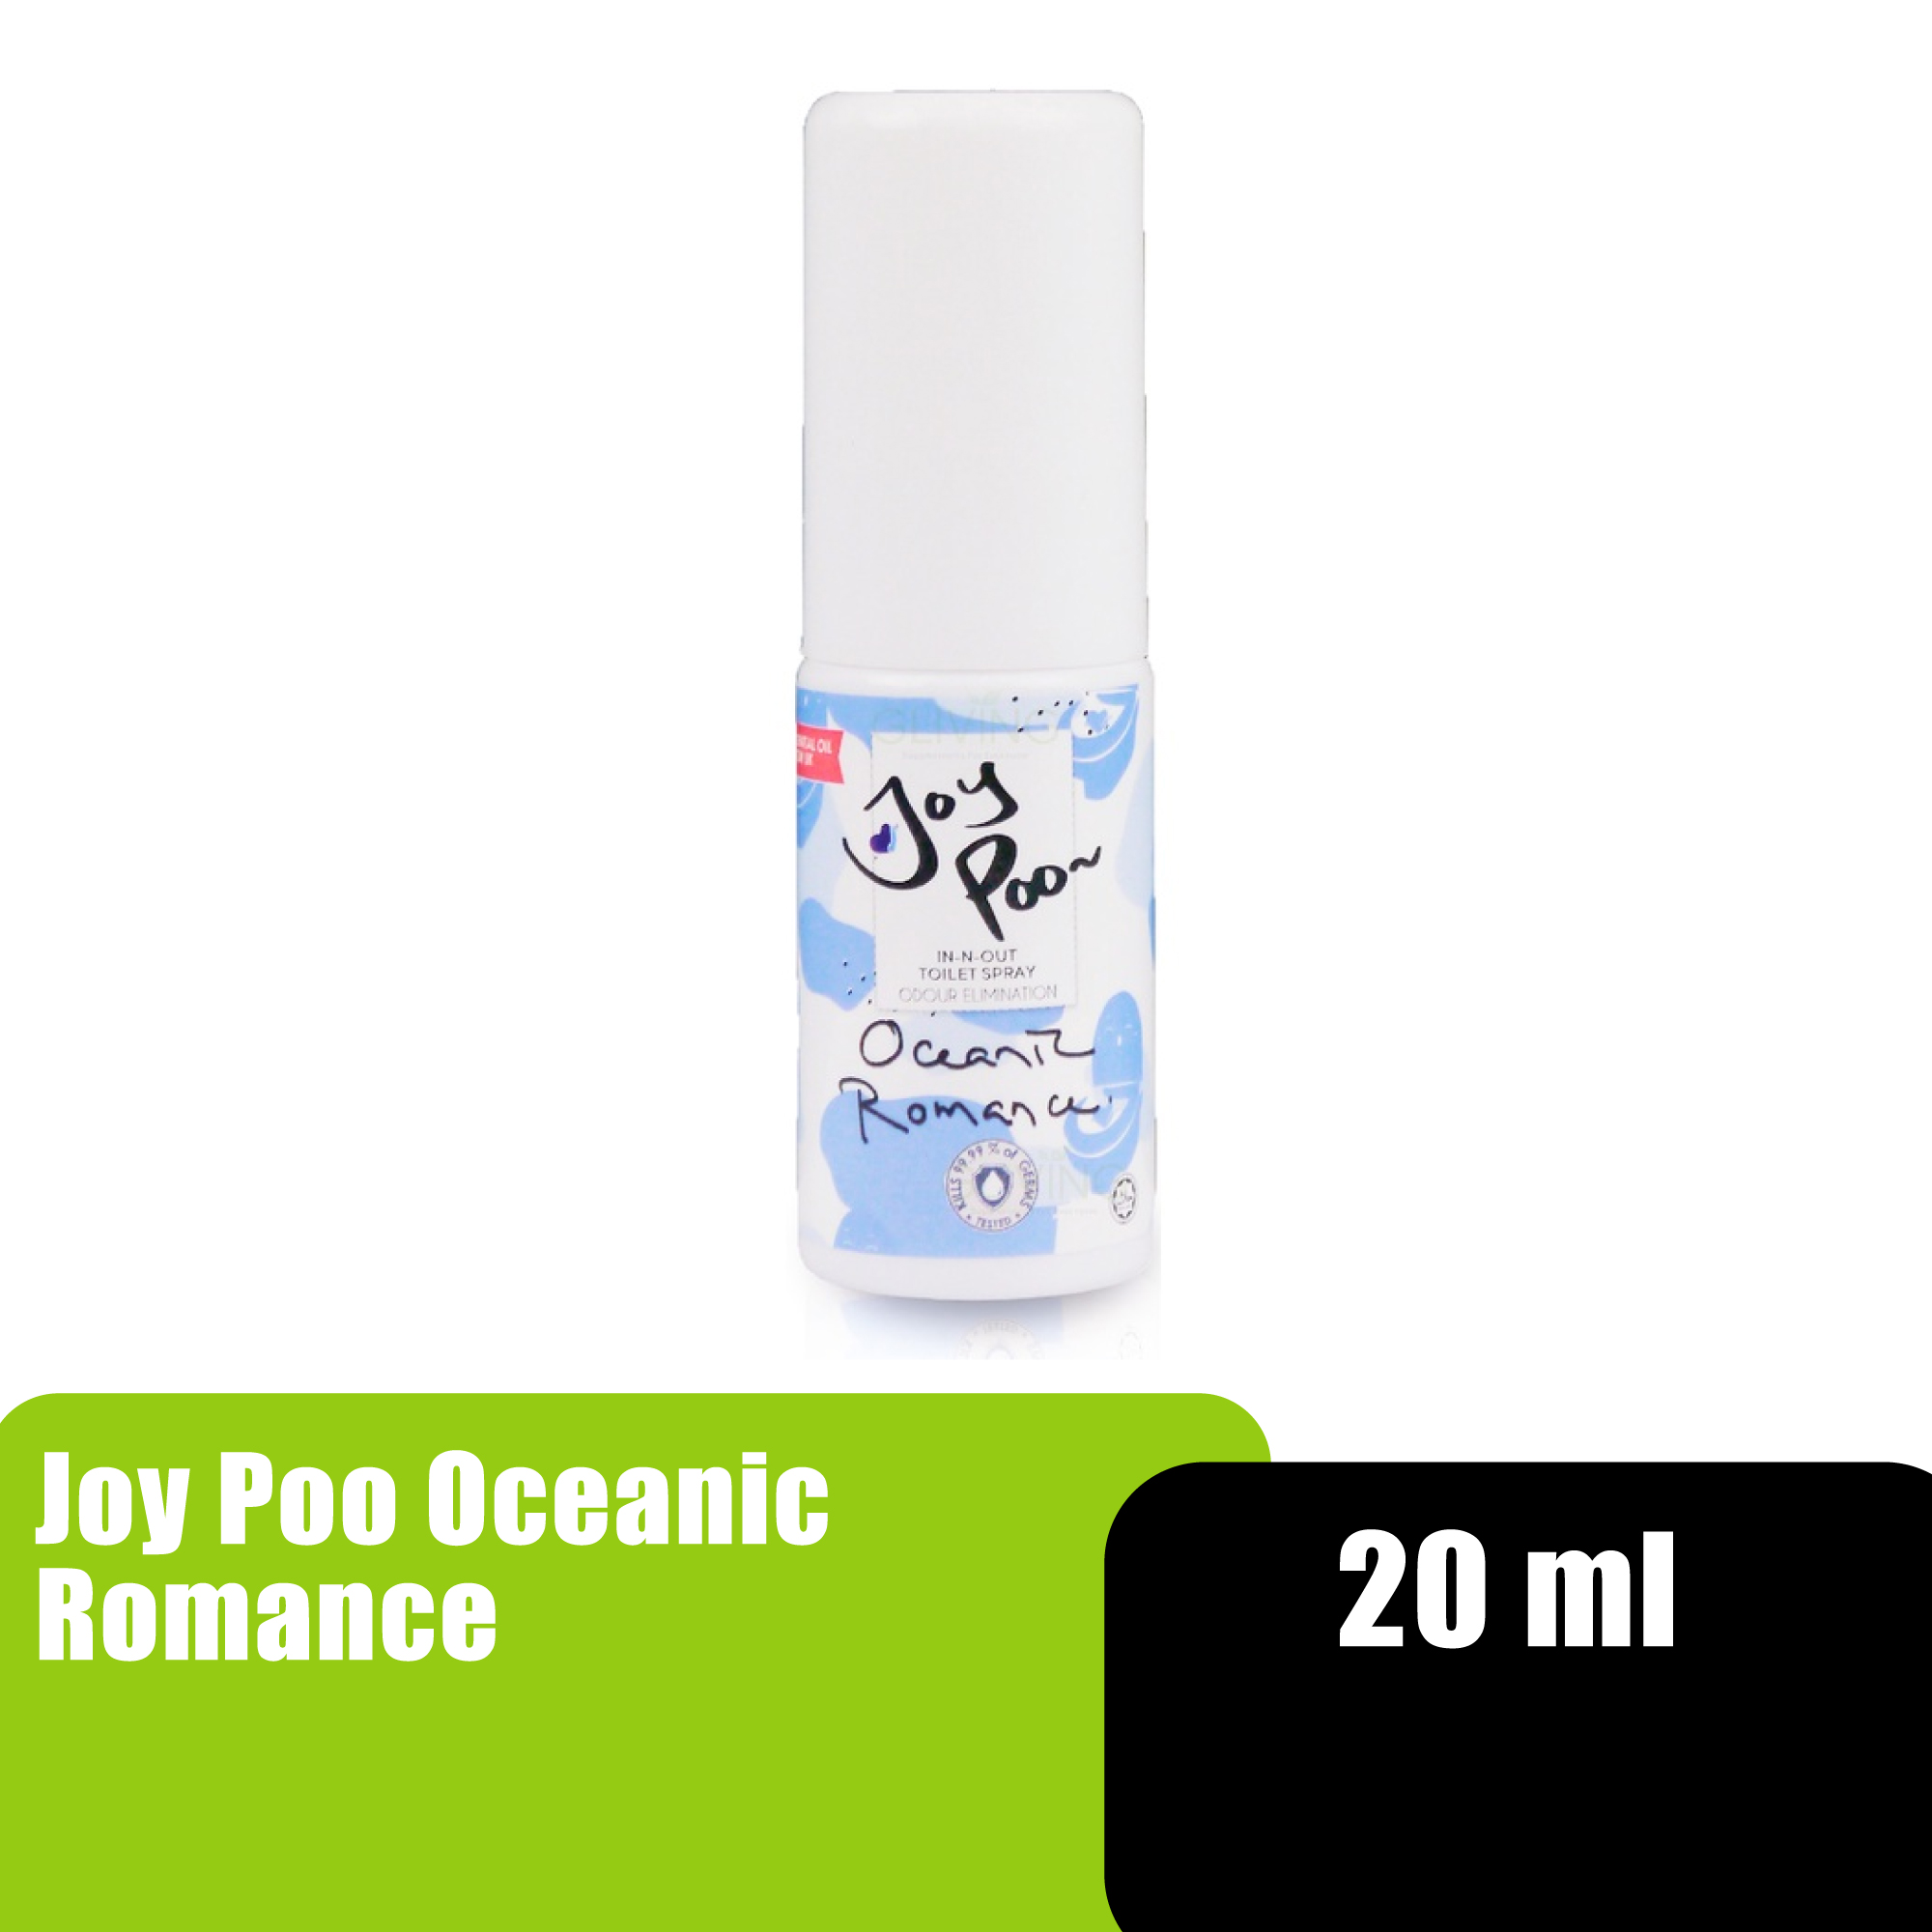 JOY POO 20ML - OCEANIC ROMANCE